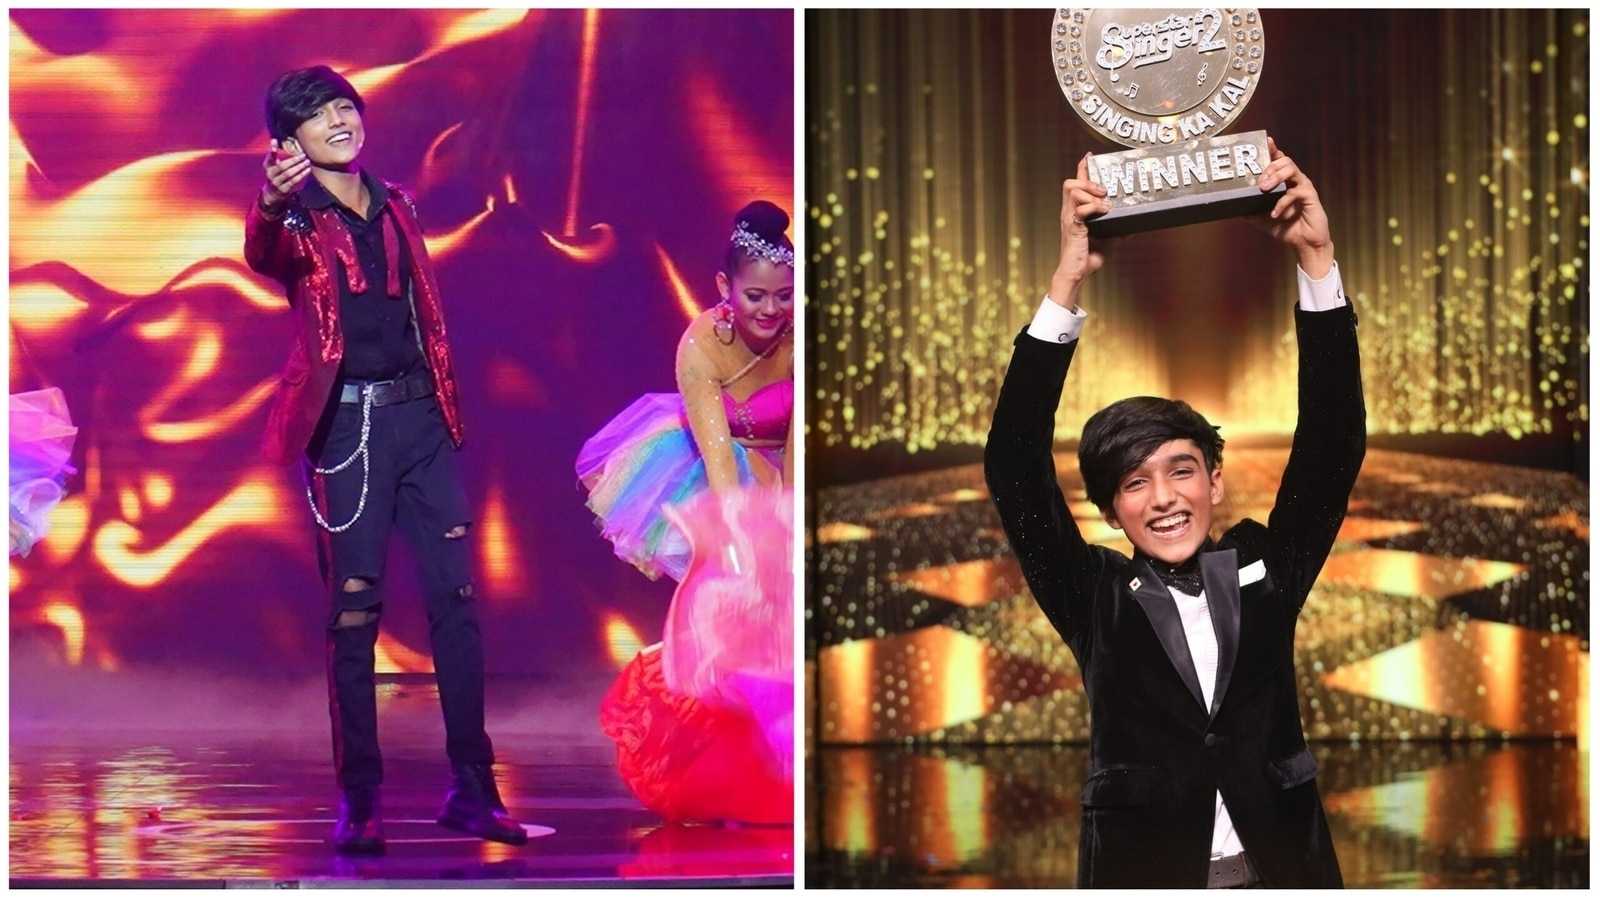 Faizxxxvideos - Superstar Singer 2: Mohammad Faiz wins grand finale, takes home â‚¹15 lakh -  Hindustan Times